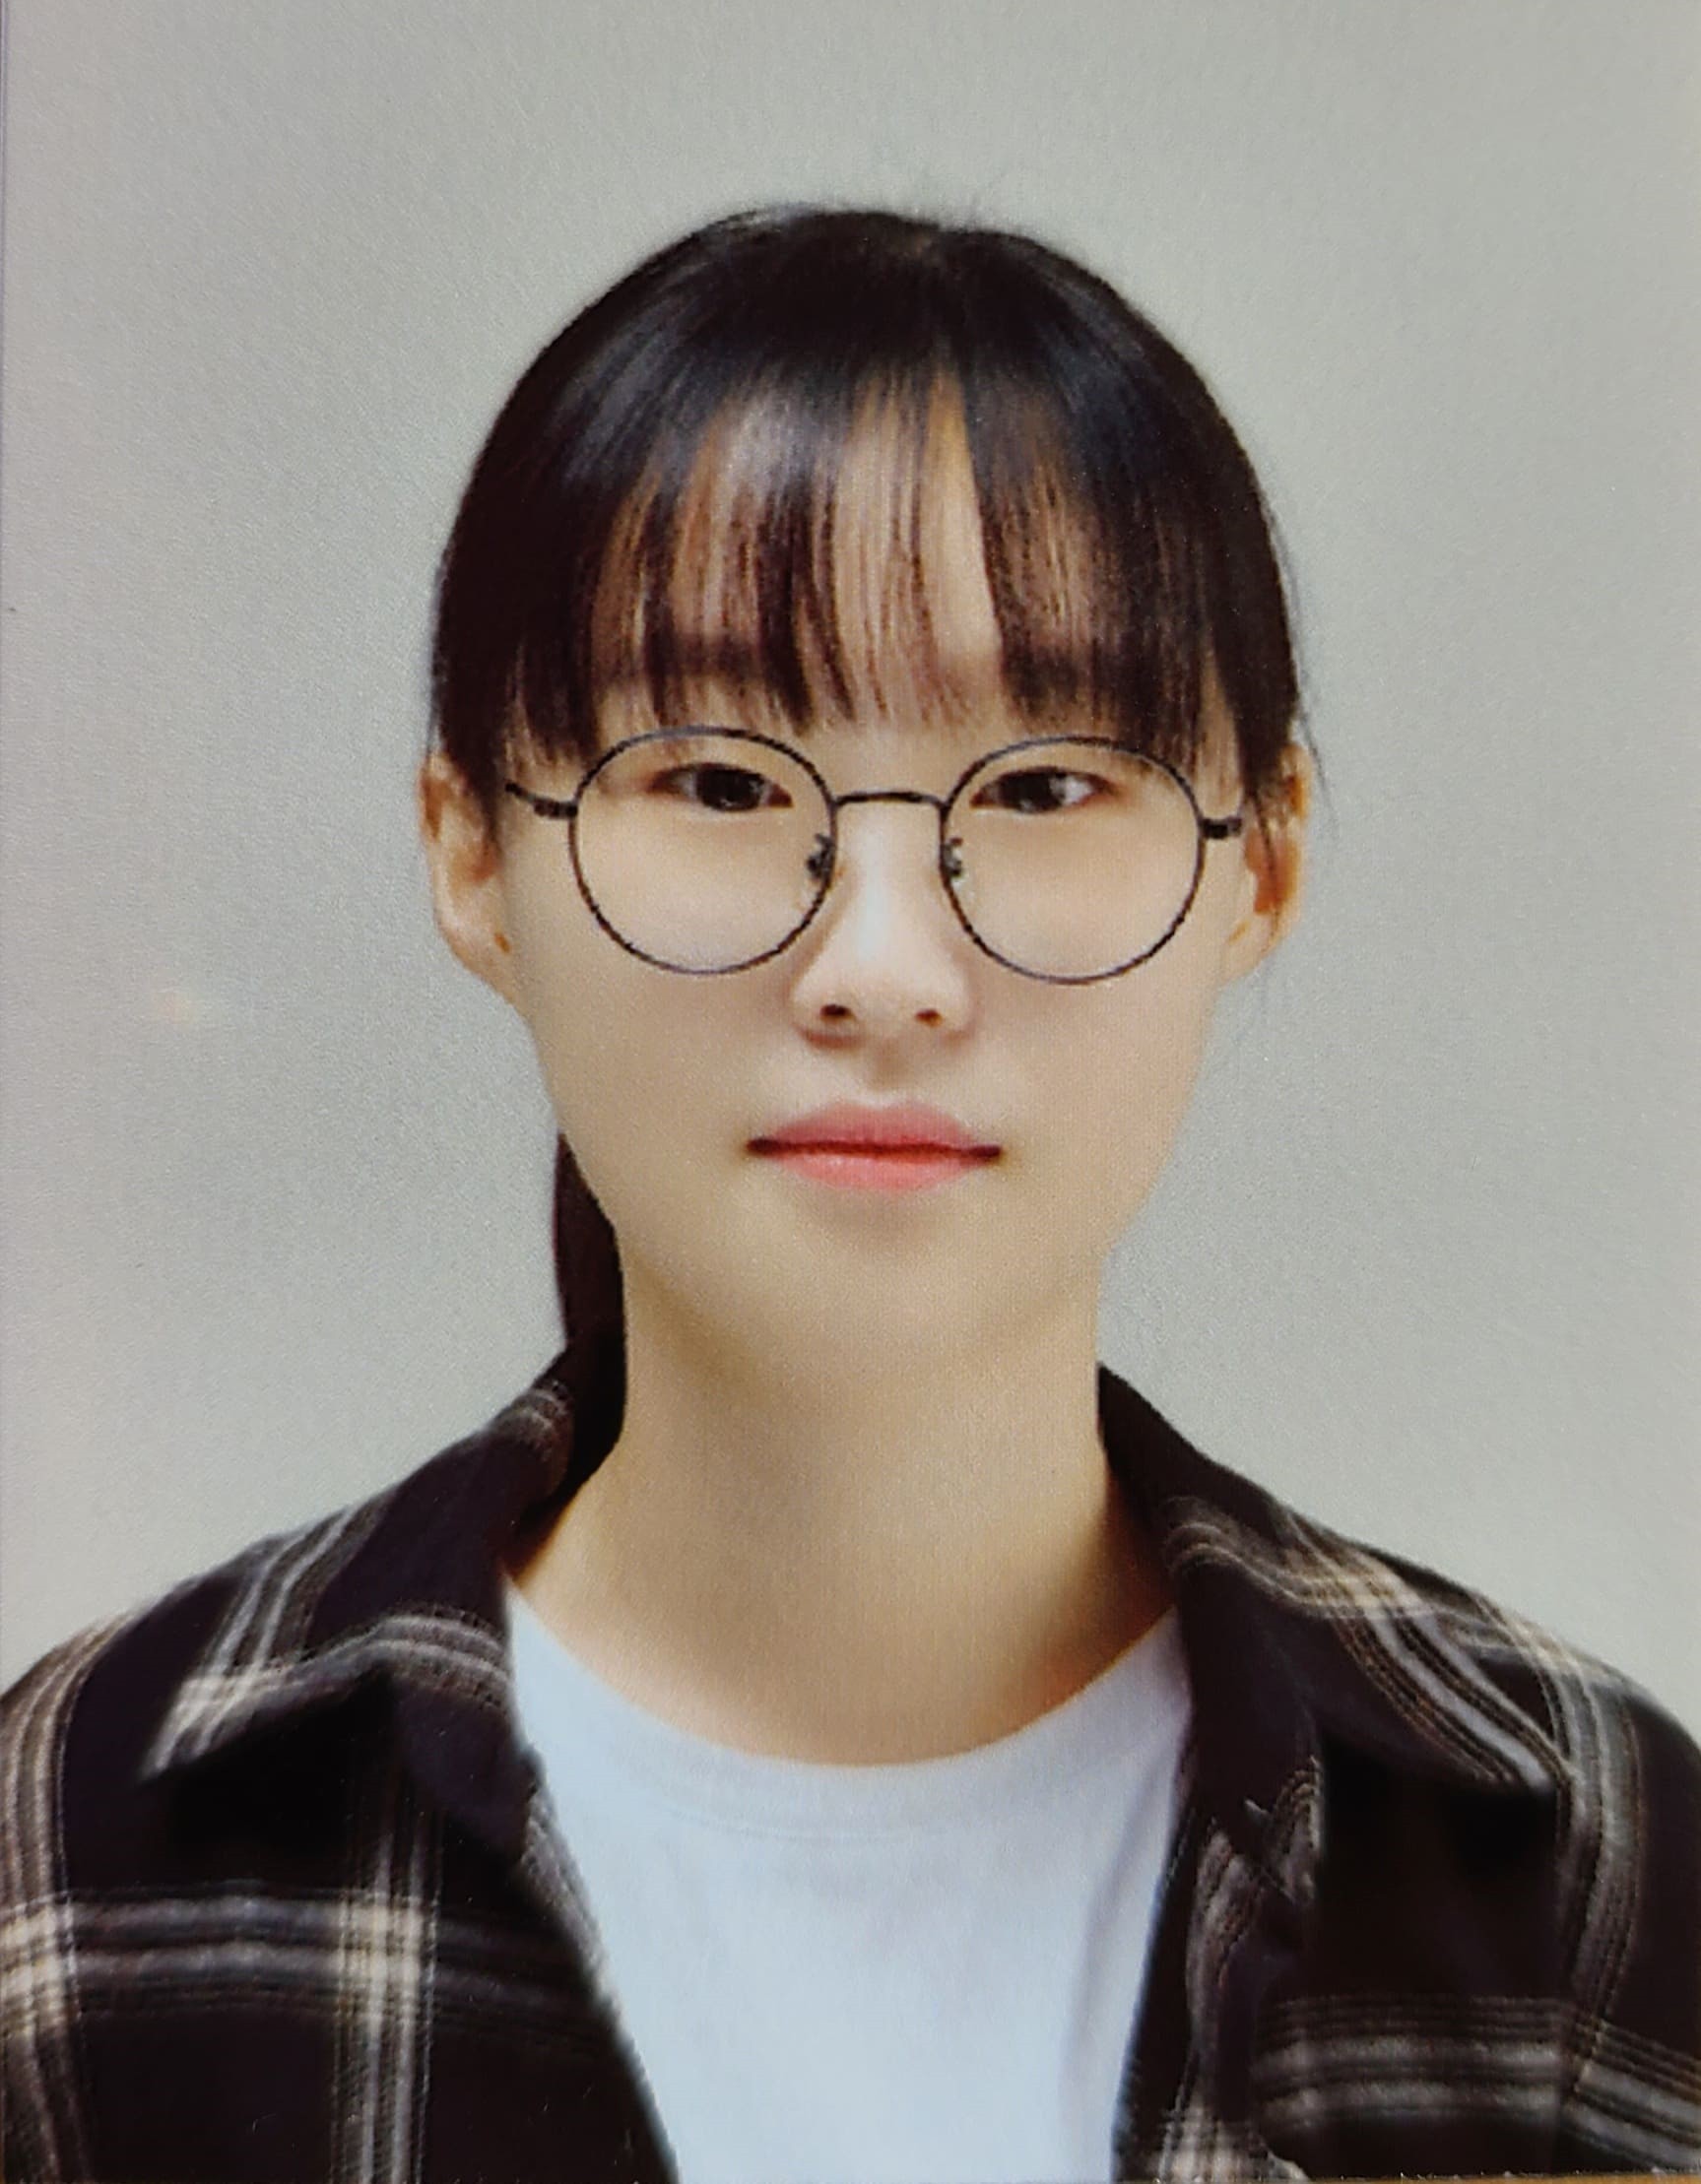 Ms. Onesun Jeong